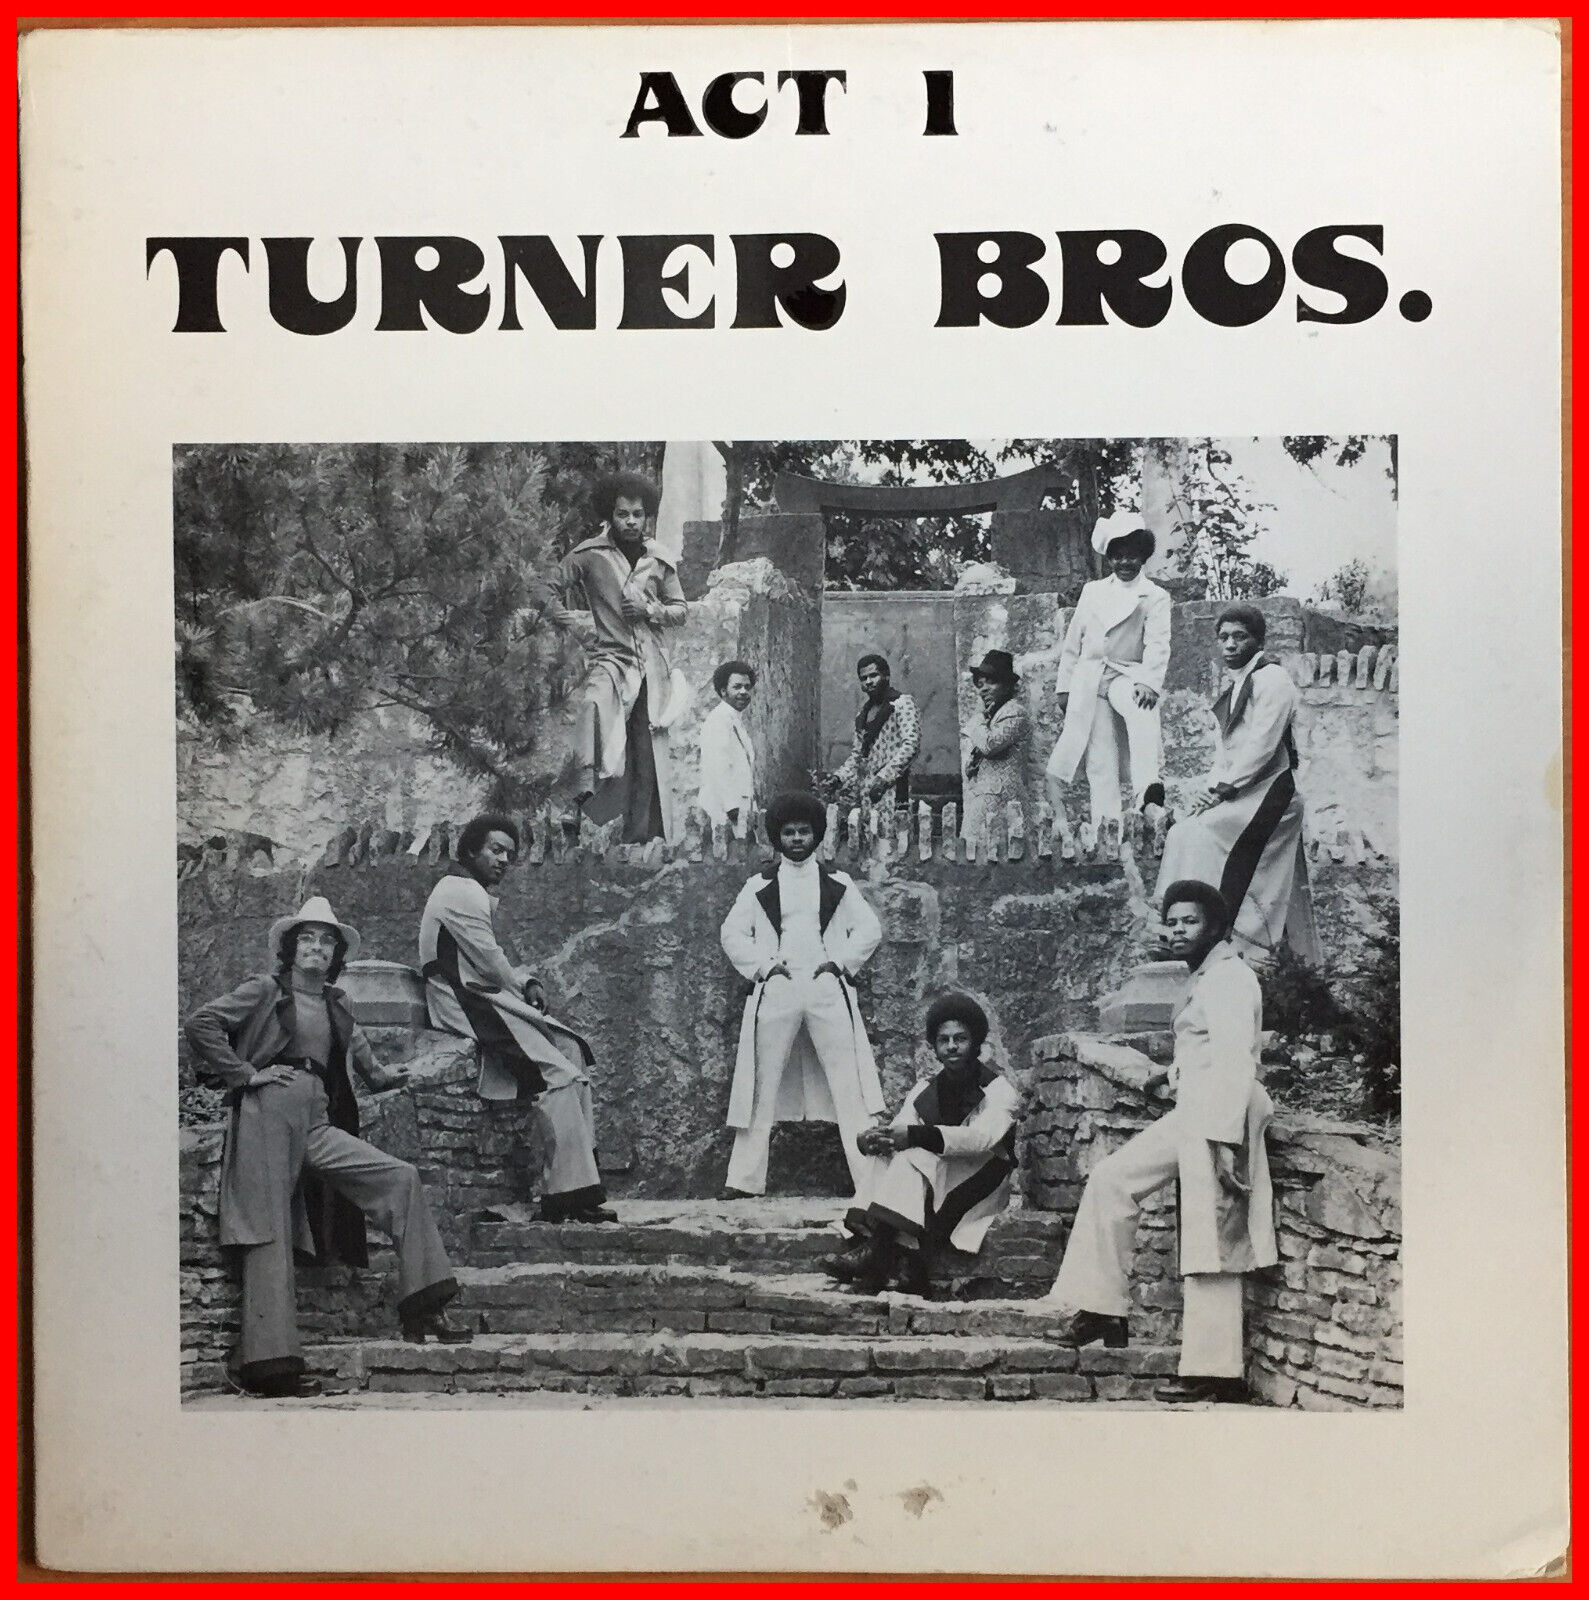 INDIANA SOUL FUNK LP Turner Bros  act 1 MB   ULTRA RARE OG  75 GRAIL   NM mp3